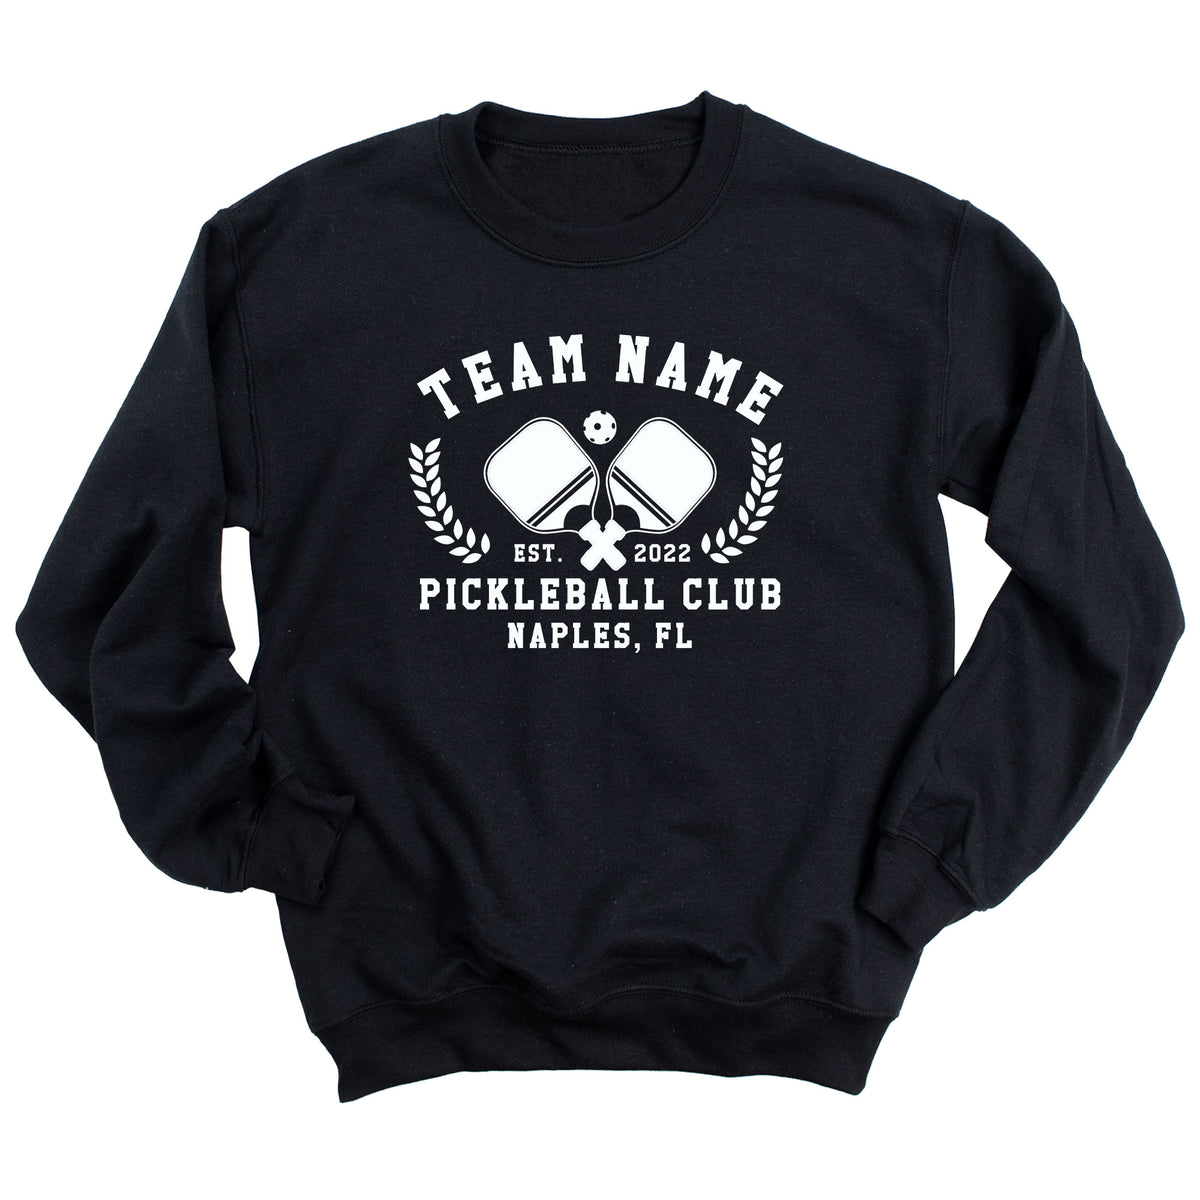 Personalized Pickleball Club Sweatshirt